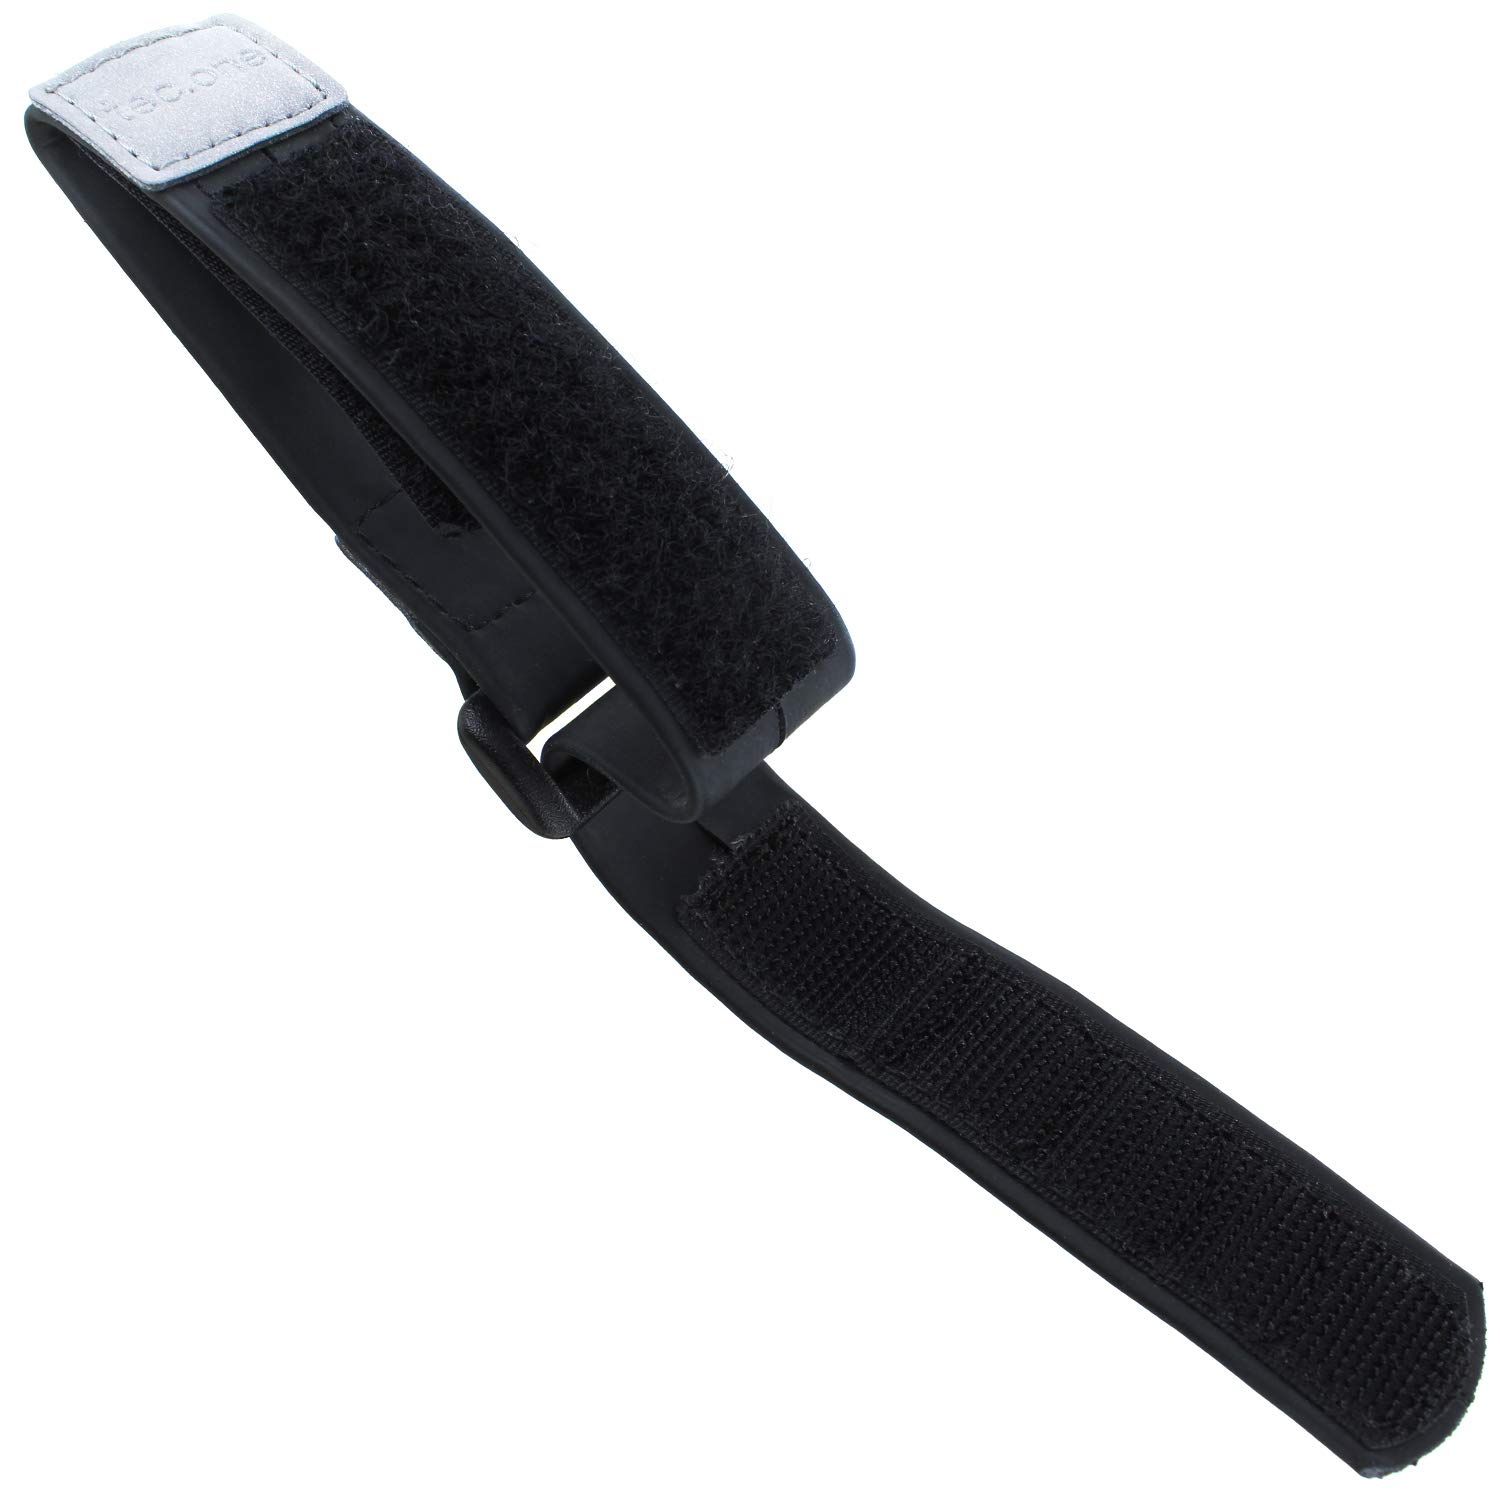 16-20mm Heavy Rubber Black Tec One Sport Strap Wrap Watch Band